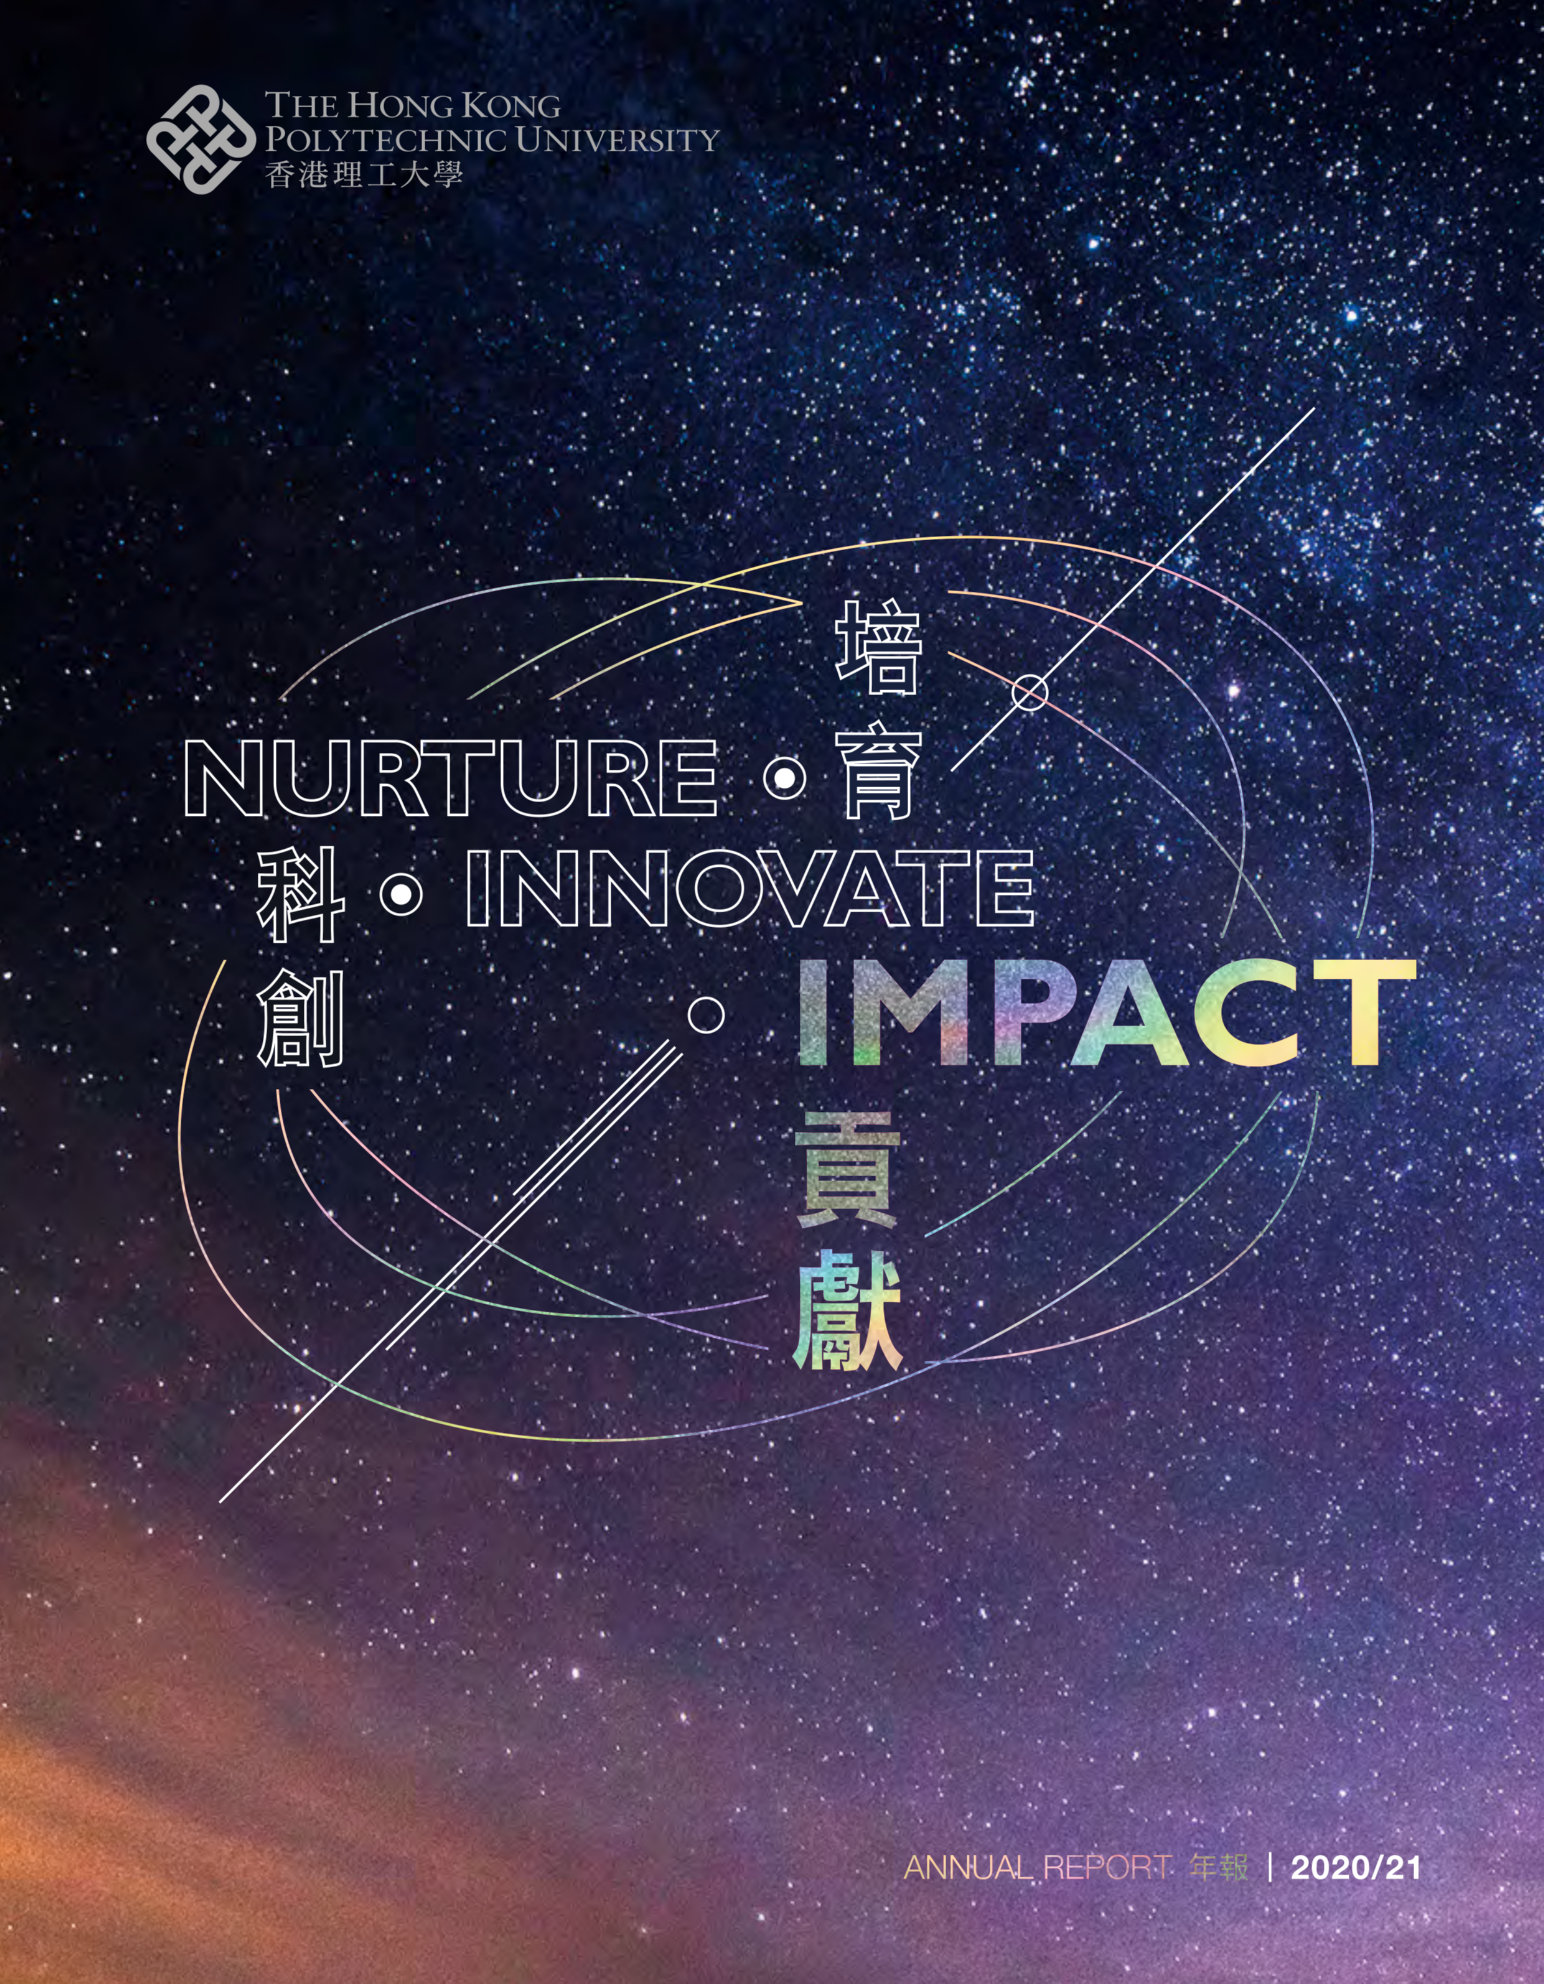 PolyU Annual Report 2020/21 - Nurture  Innovate  Impact